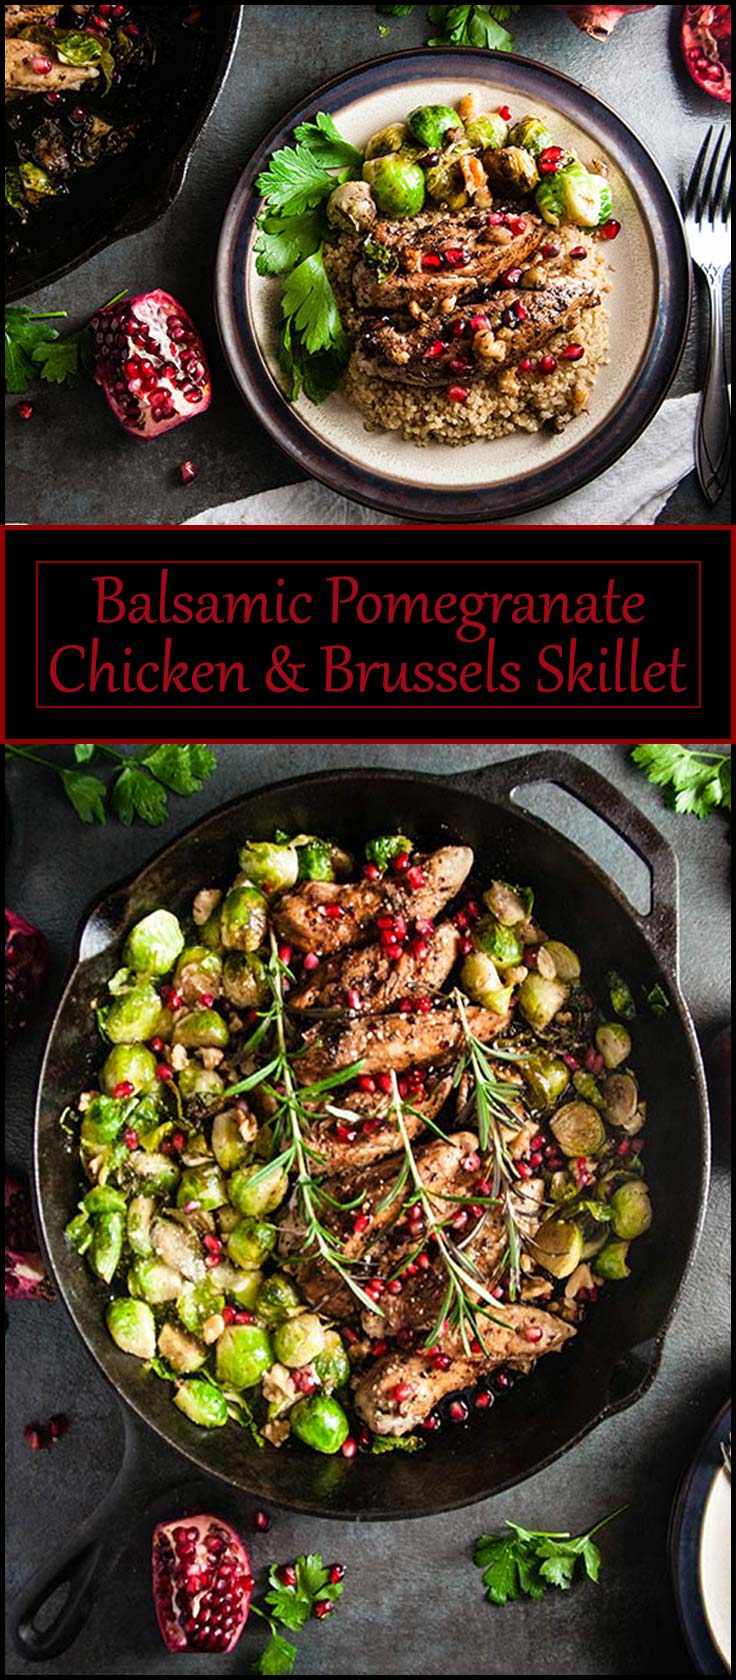 Balsamic Pomegranate Chicken Skillet from www.seasonedsprinkles.com